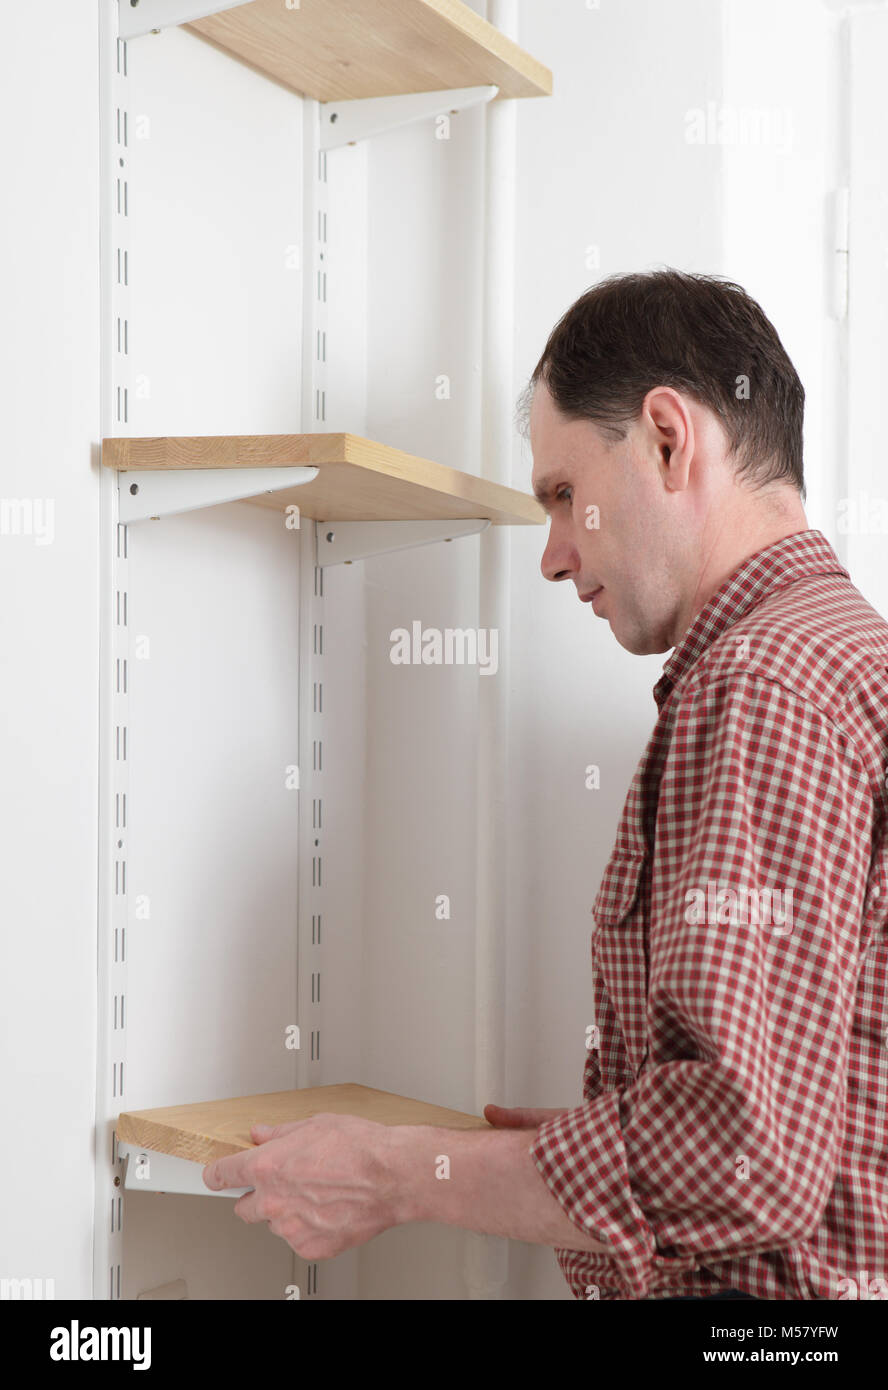 Man installing wooden shelves on brackets Stock Photo